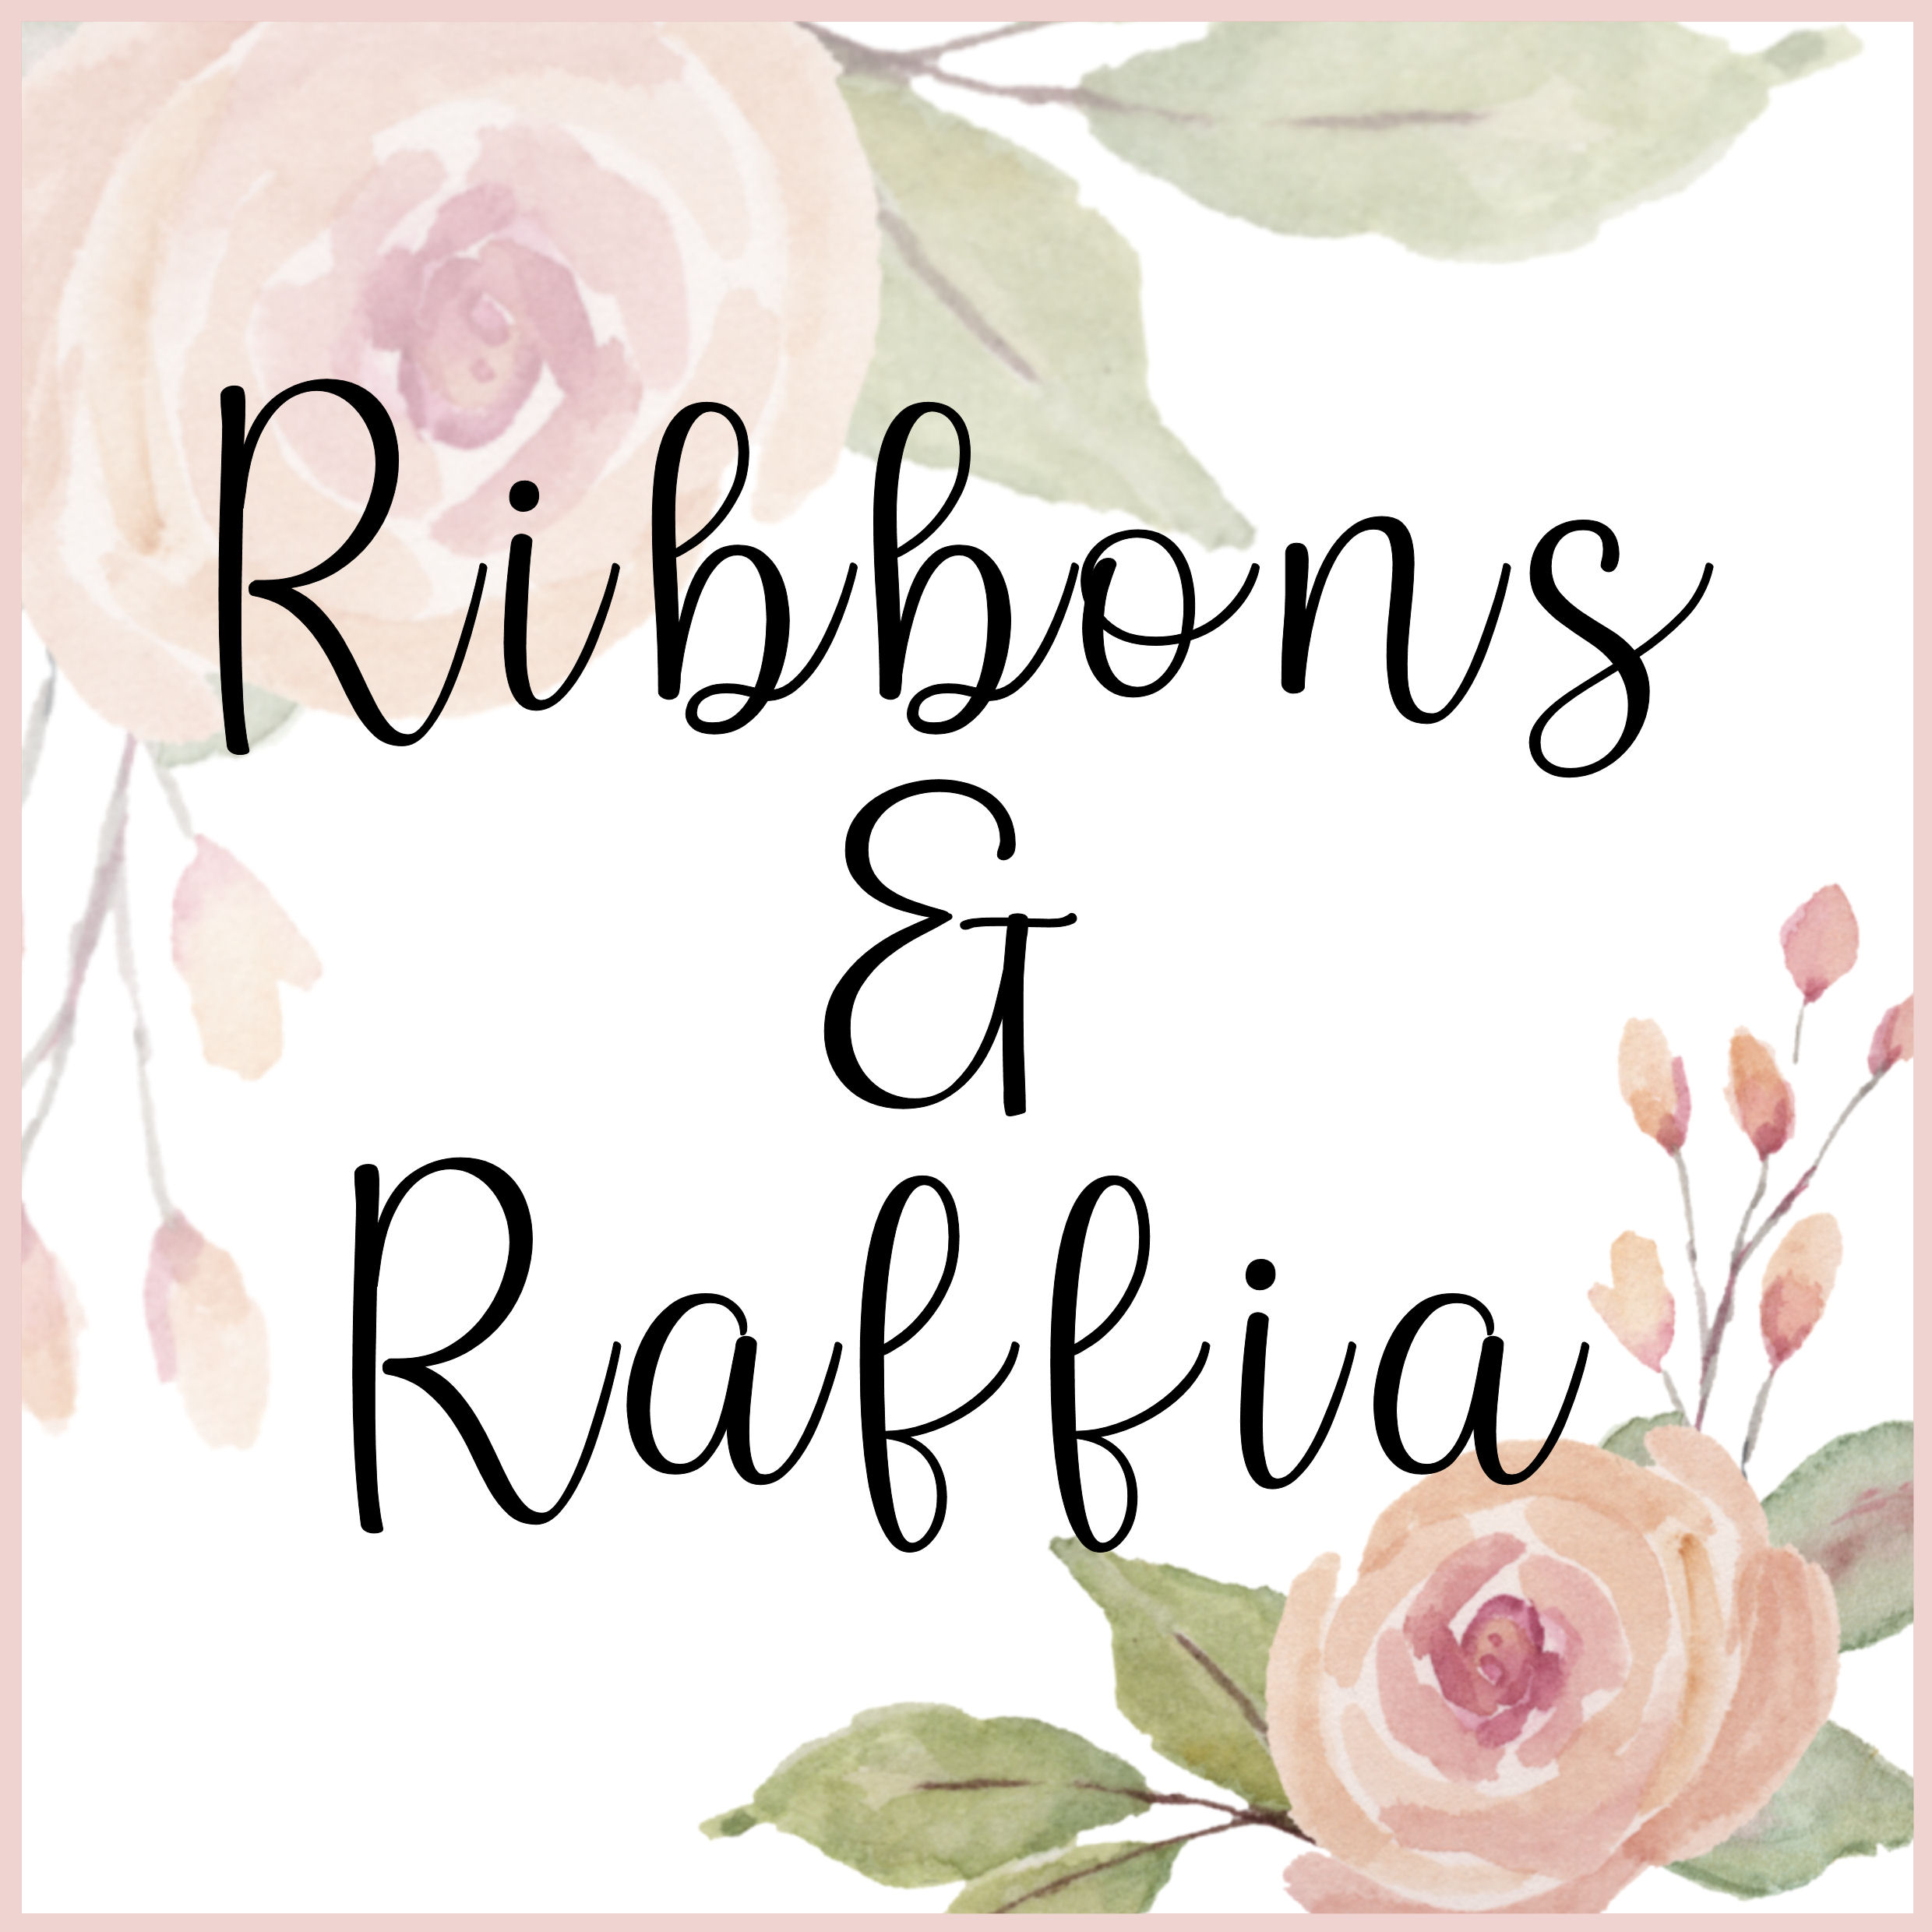 Ribbons and Raffia